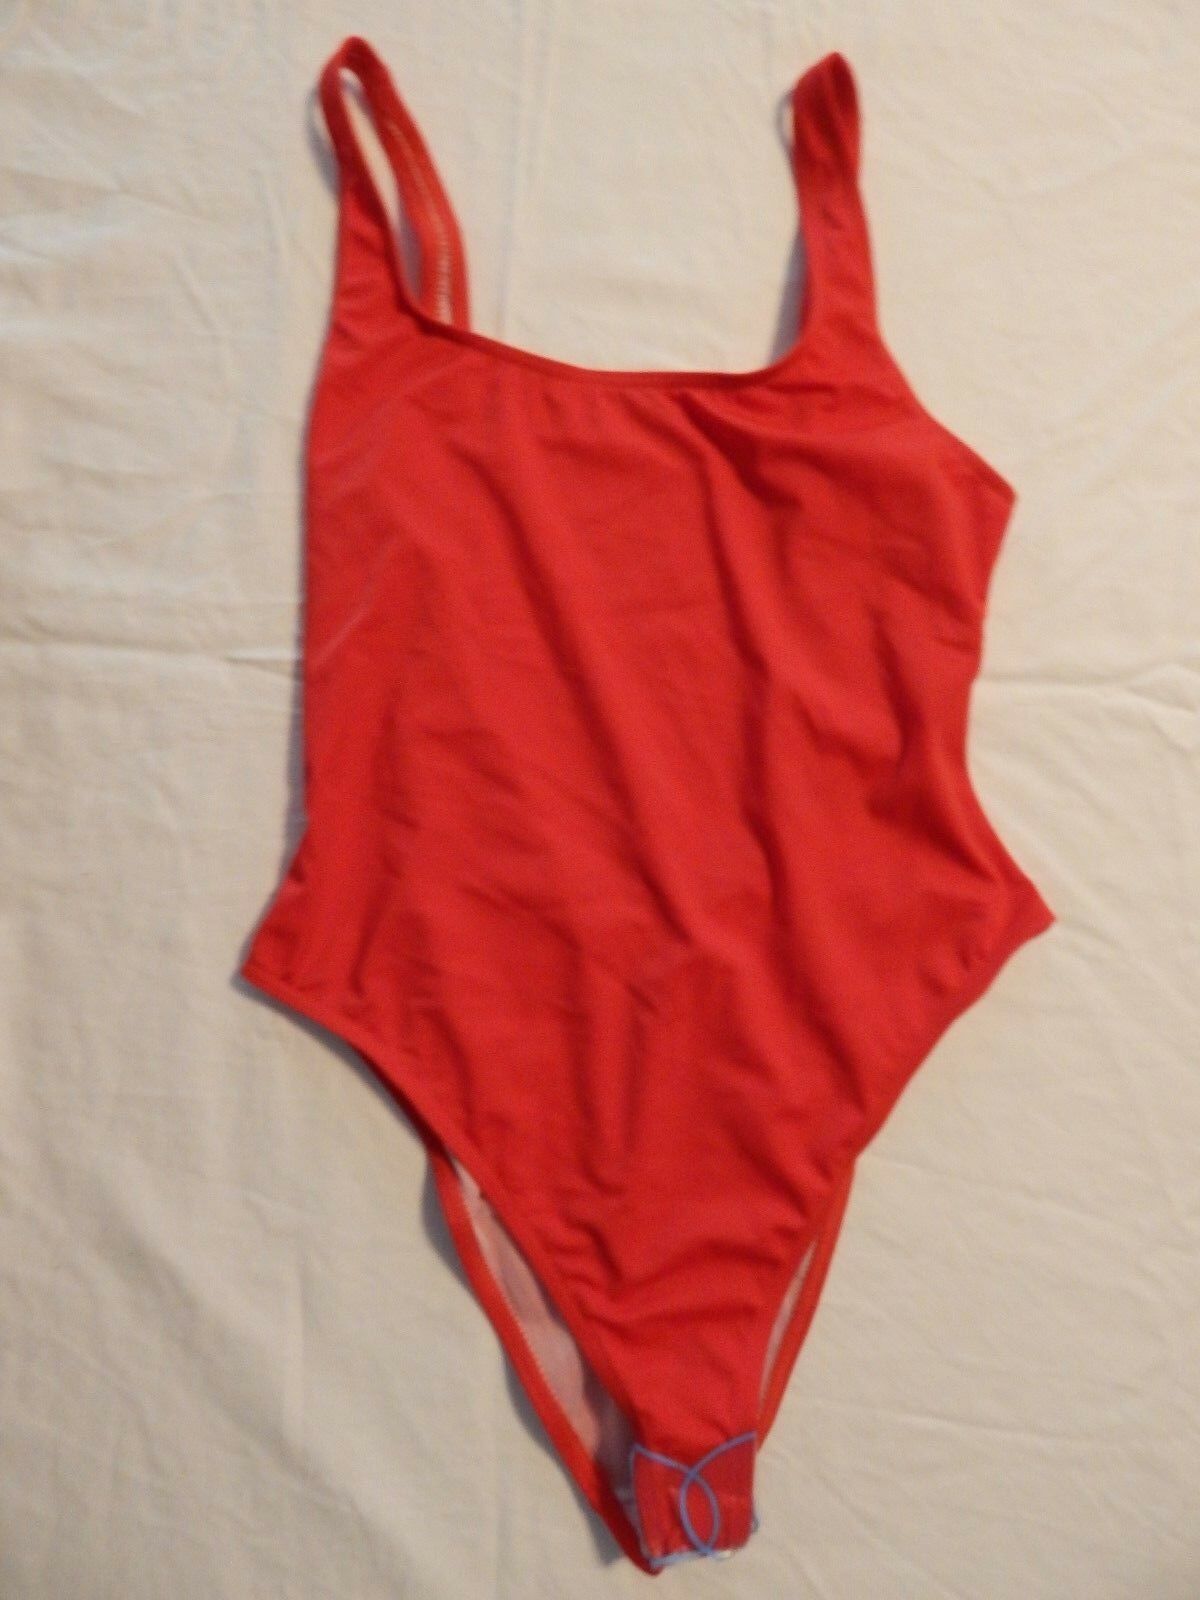 Asos -Red One Piece Swimsuit - High Leg Size 8 US, 12 UK, EU 40 - Swimwear